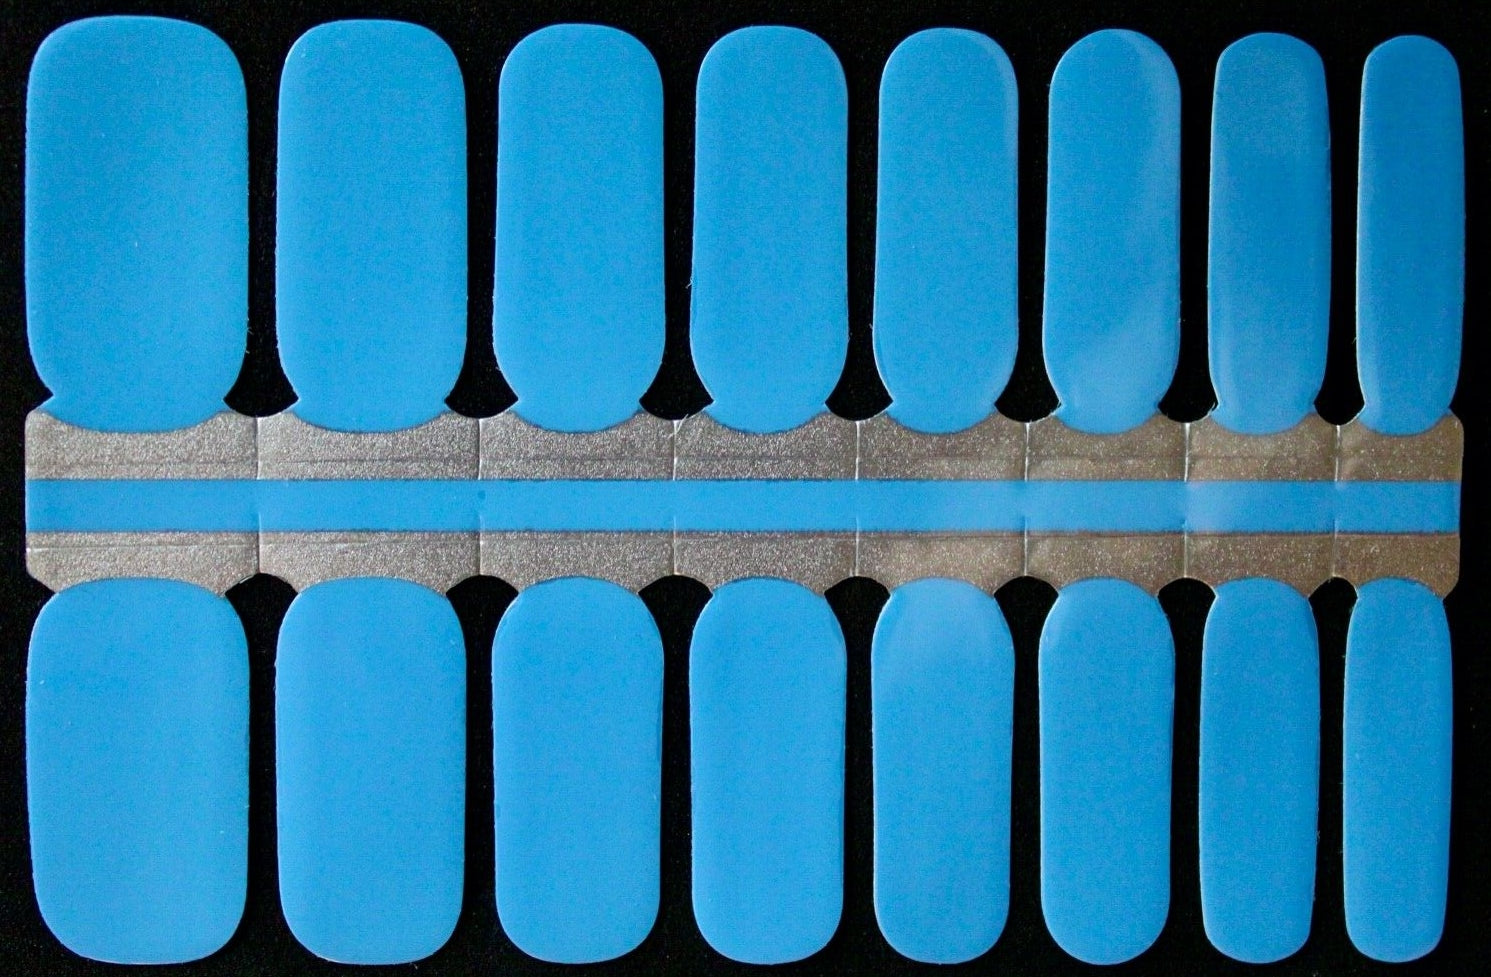 Sky blue nail polish wrap strips stickers